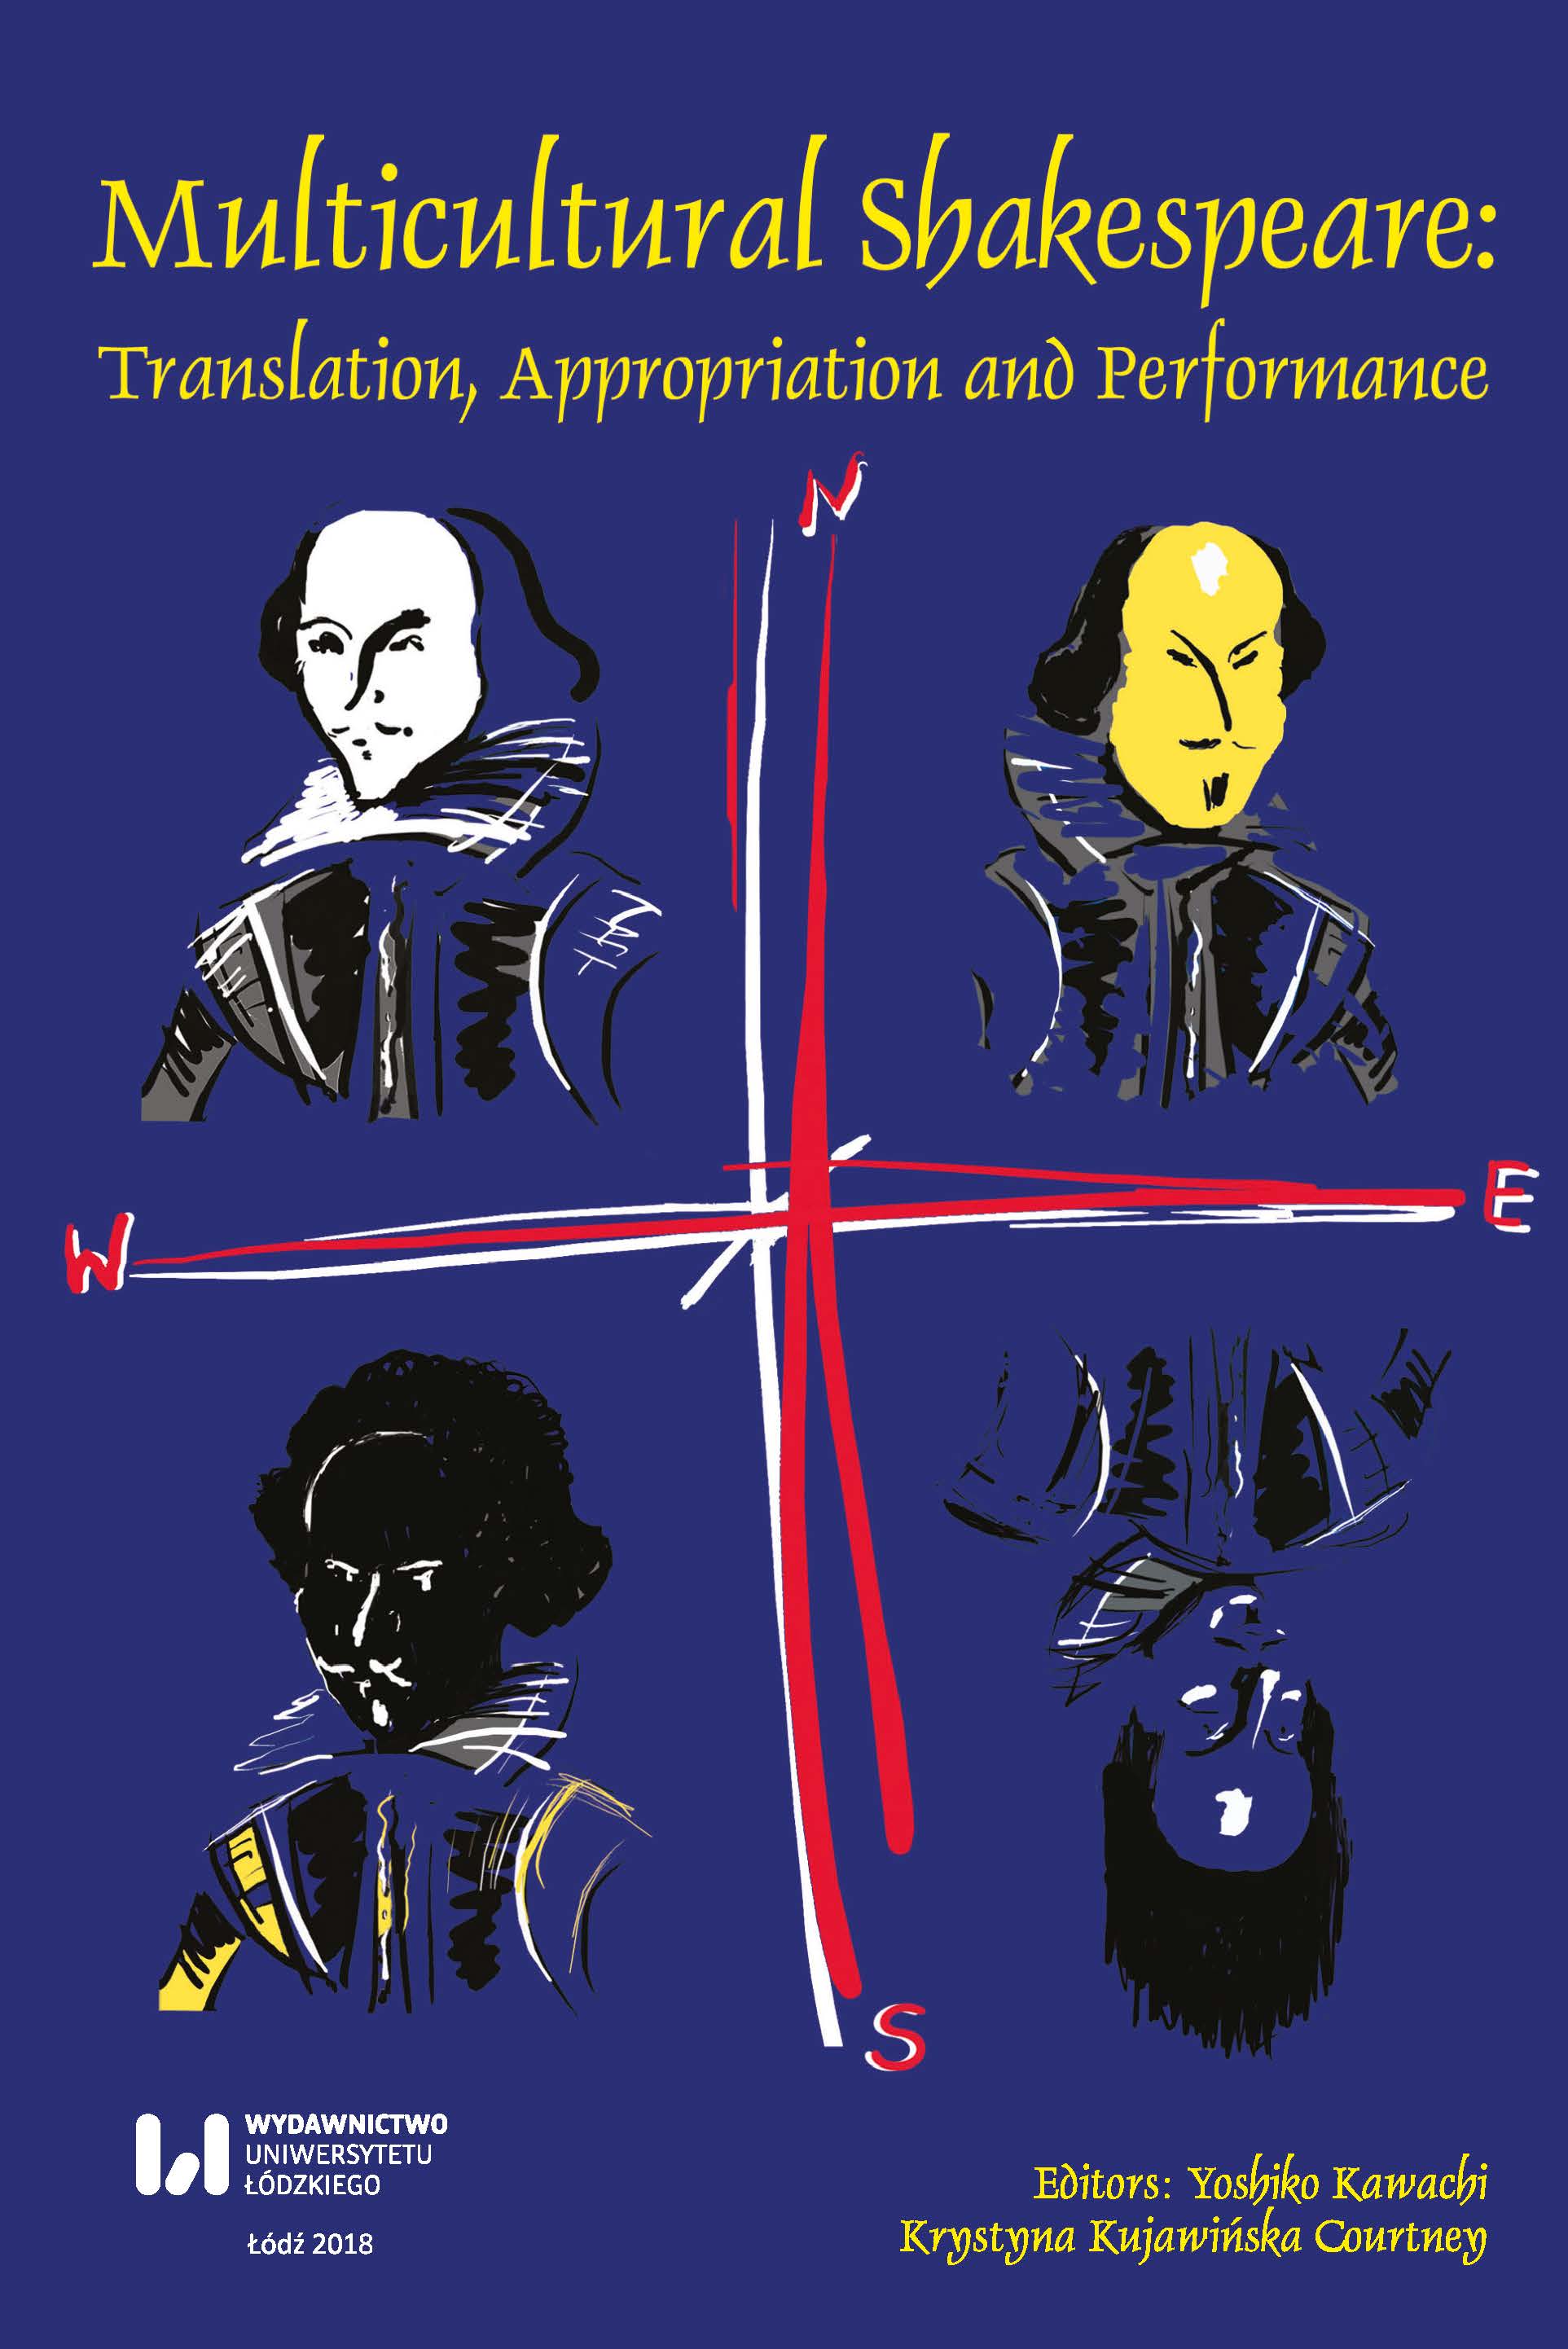 Grzegorz Wiśniewski’s Production of Richard III in Teatr Jaracza in Łódź—Textual Authority, the “Director's Cut”, and Theatre Status Cover Image